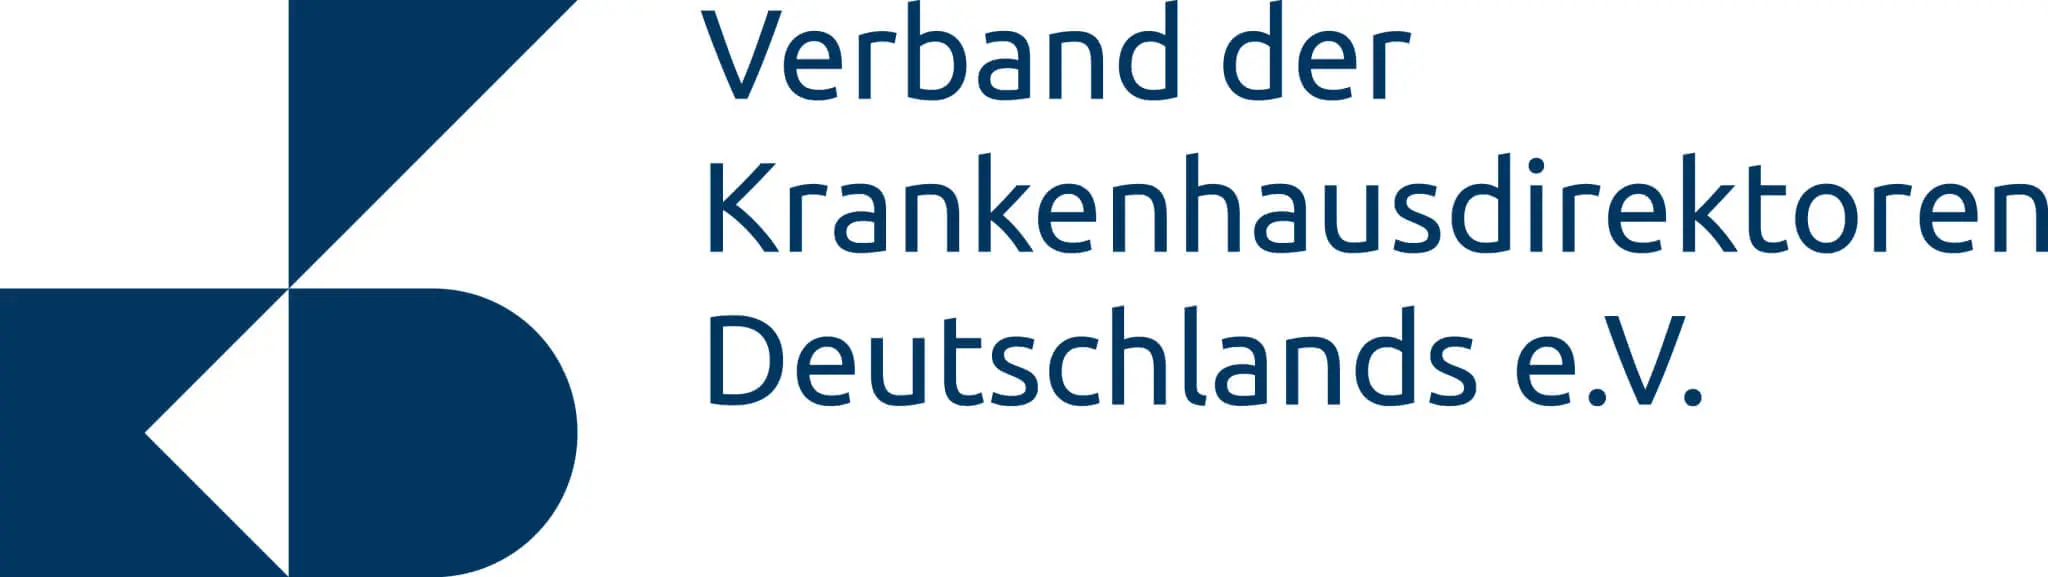 Verband der Krnakenhausdirektoren Deutschlands e.V.